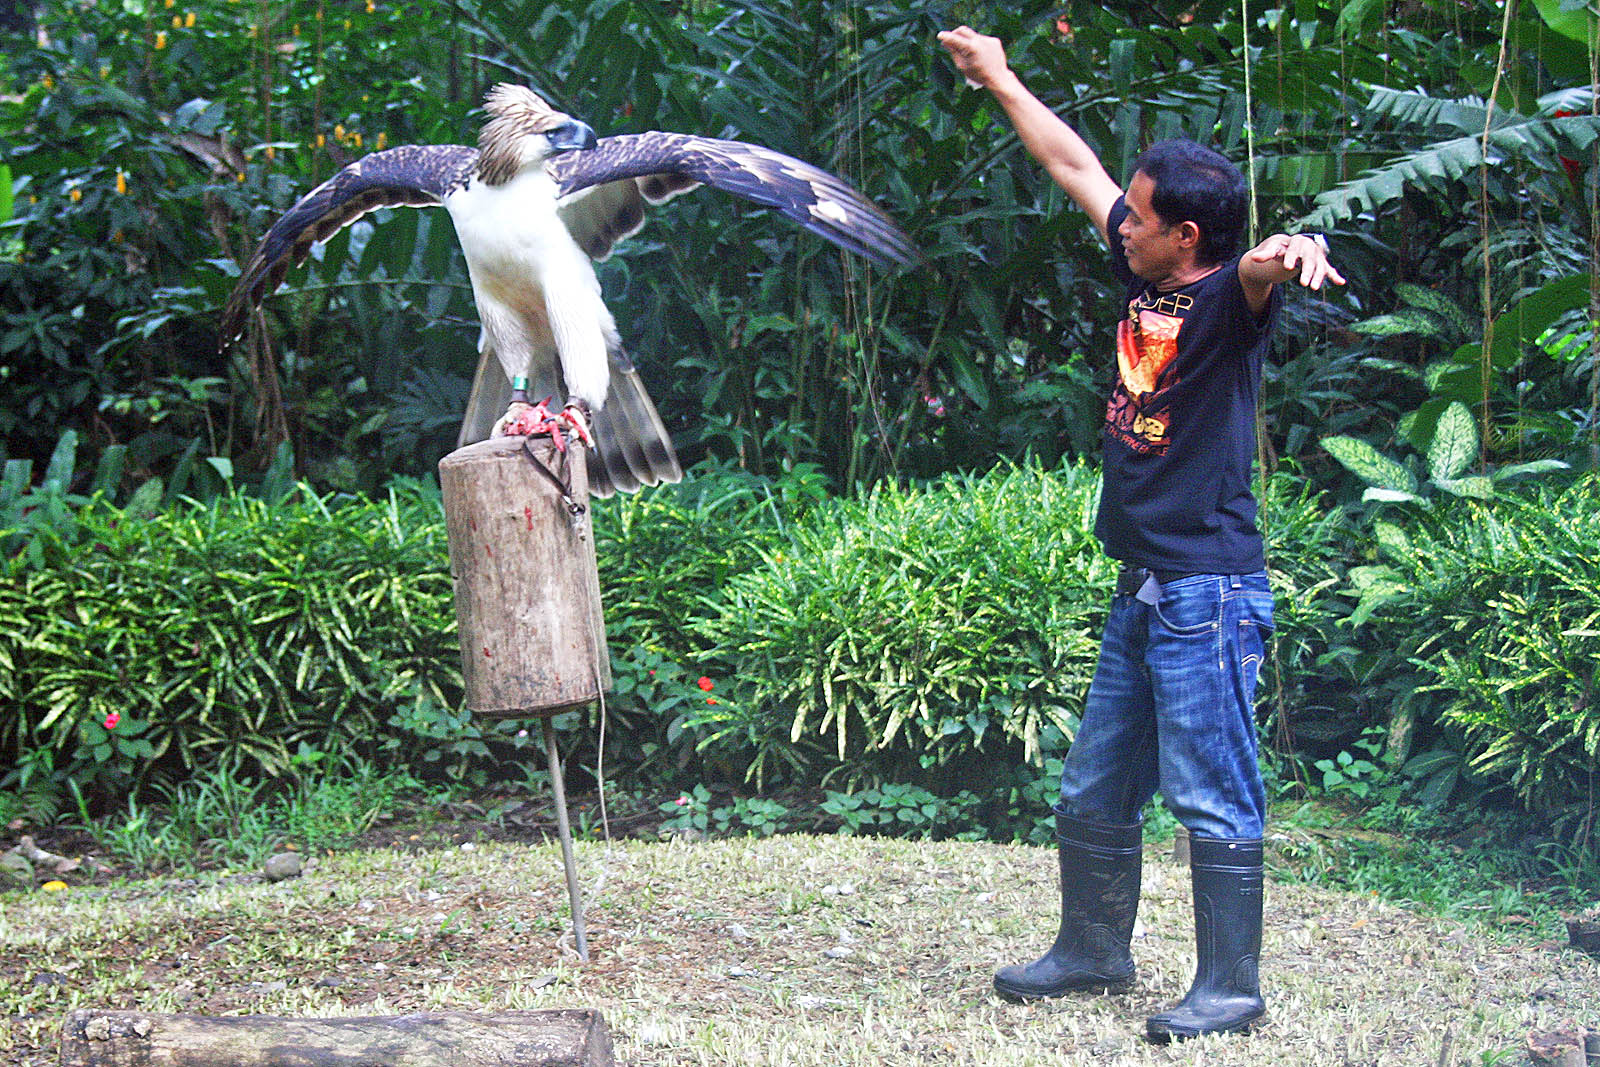 haast eagle compared to human